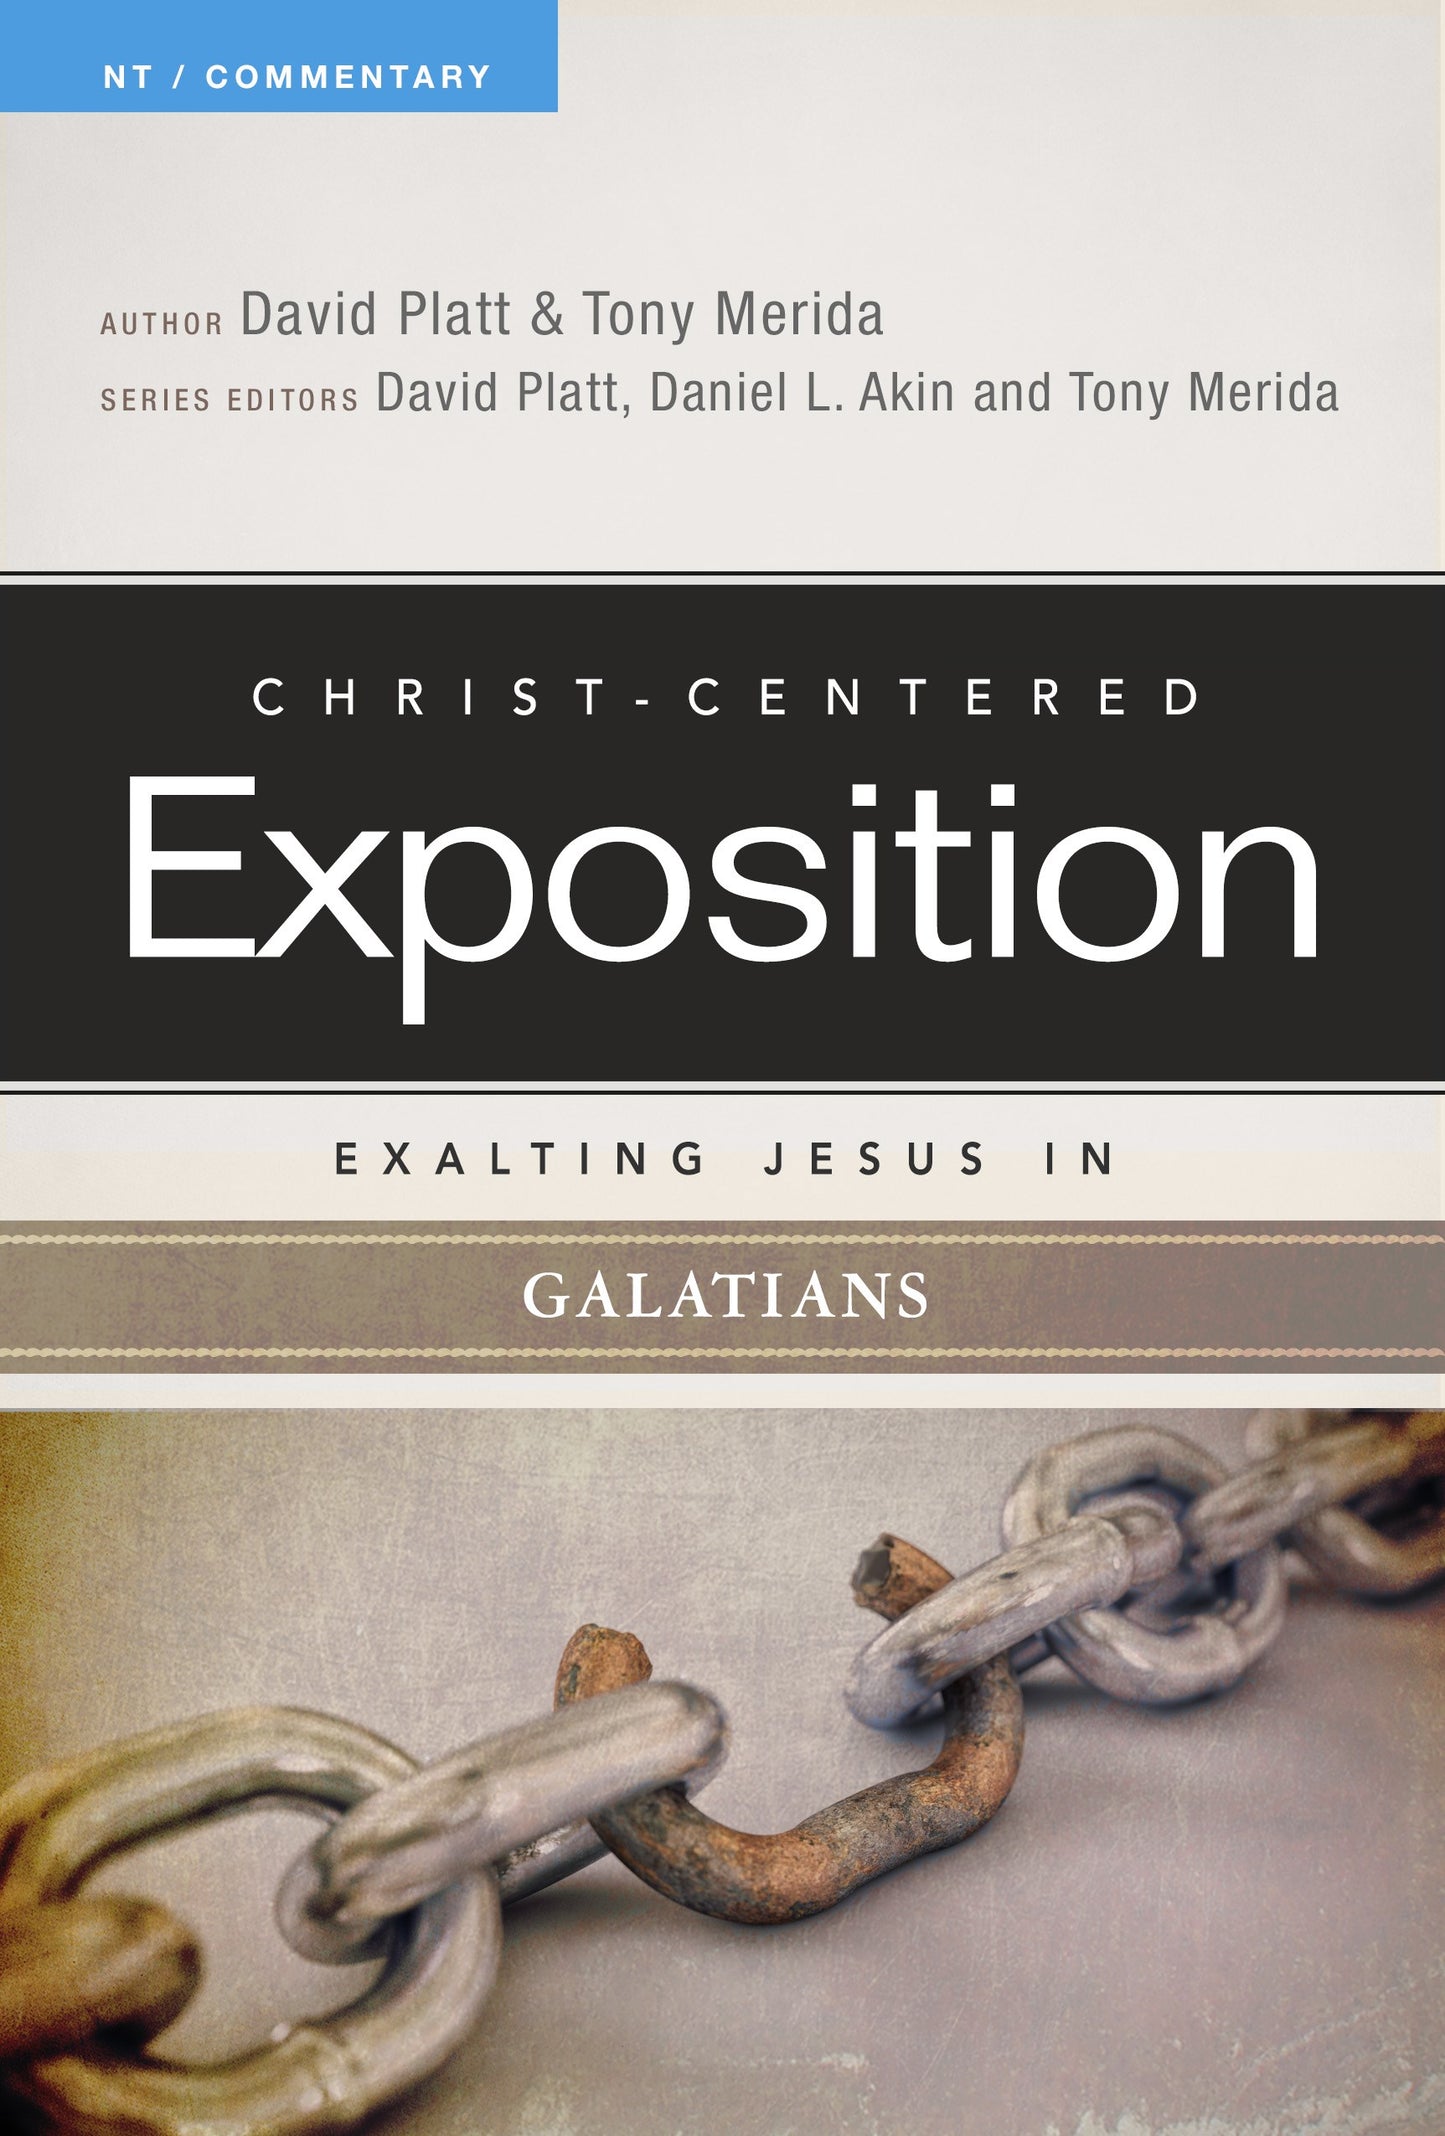 Exalting Jesus In Galatians (Christ-Centered Exposition)